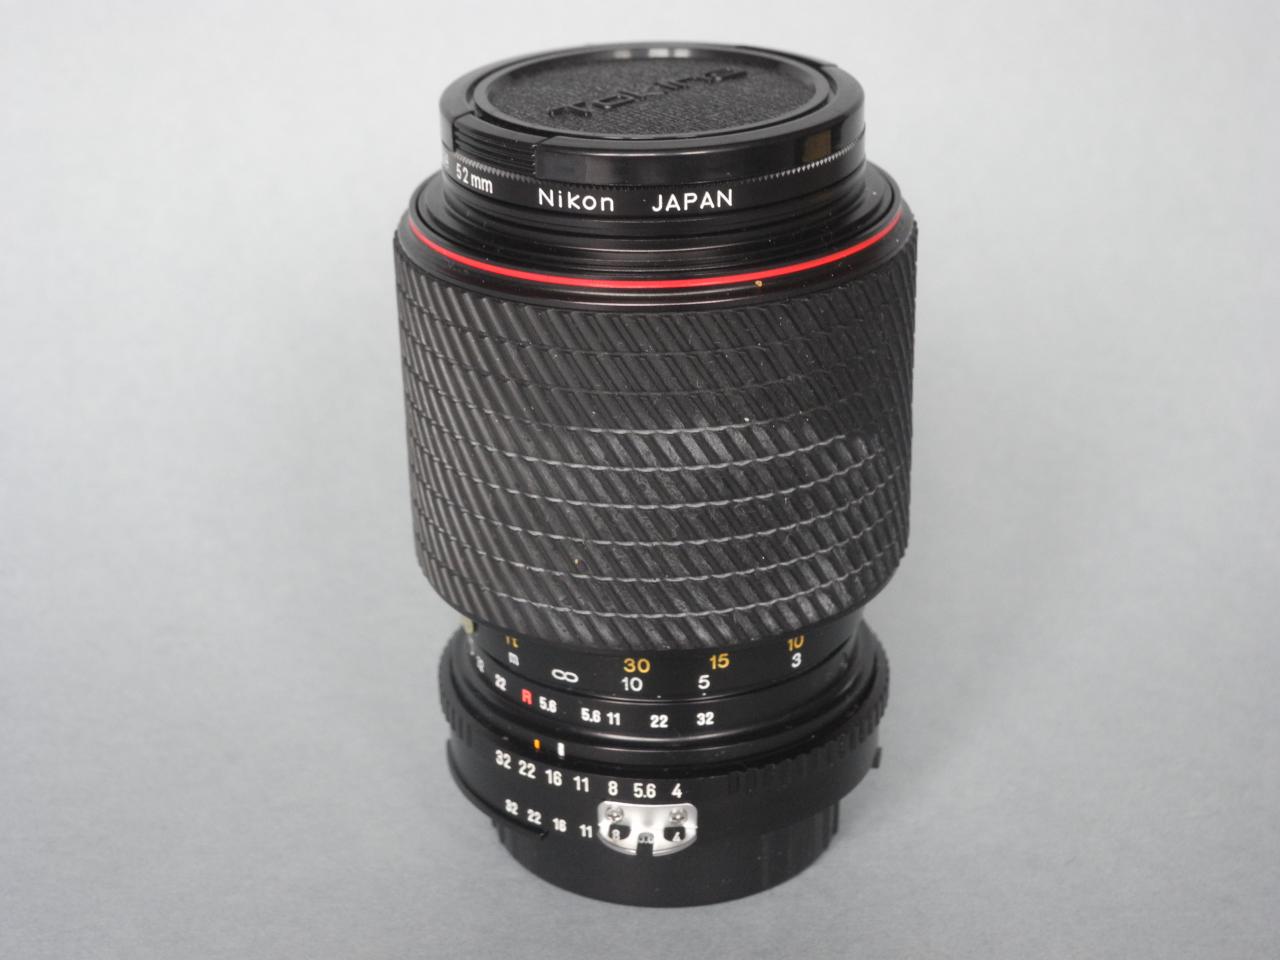 *objectif Tokina zoom SD 1:4-5,6/70-200mm monture Nikon*